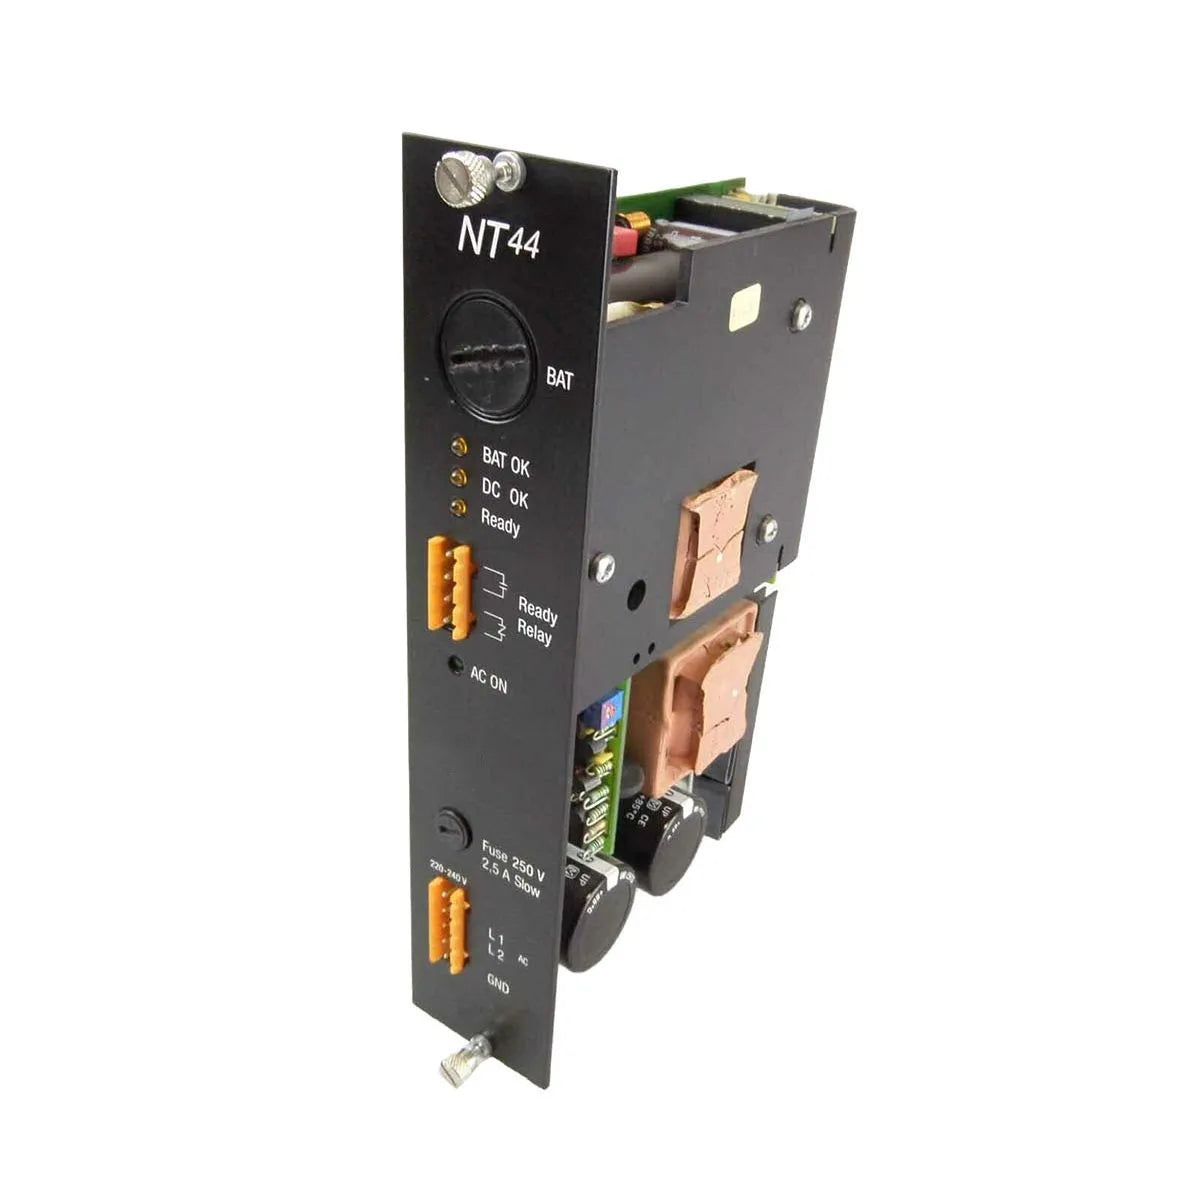 ECNT44-0 PLC Power Supply NT44